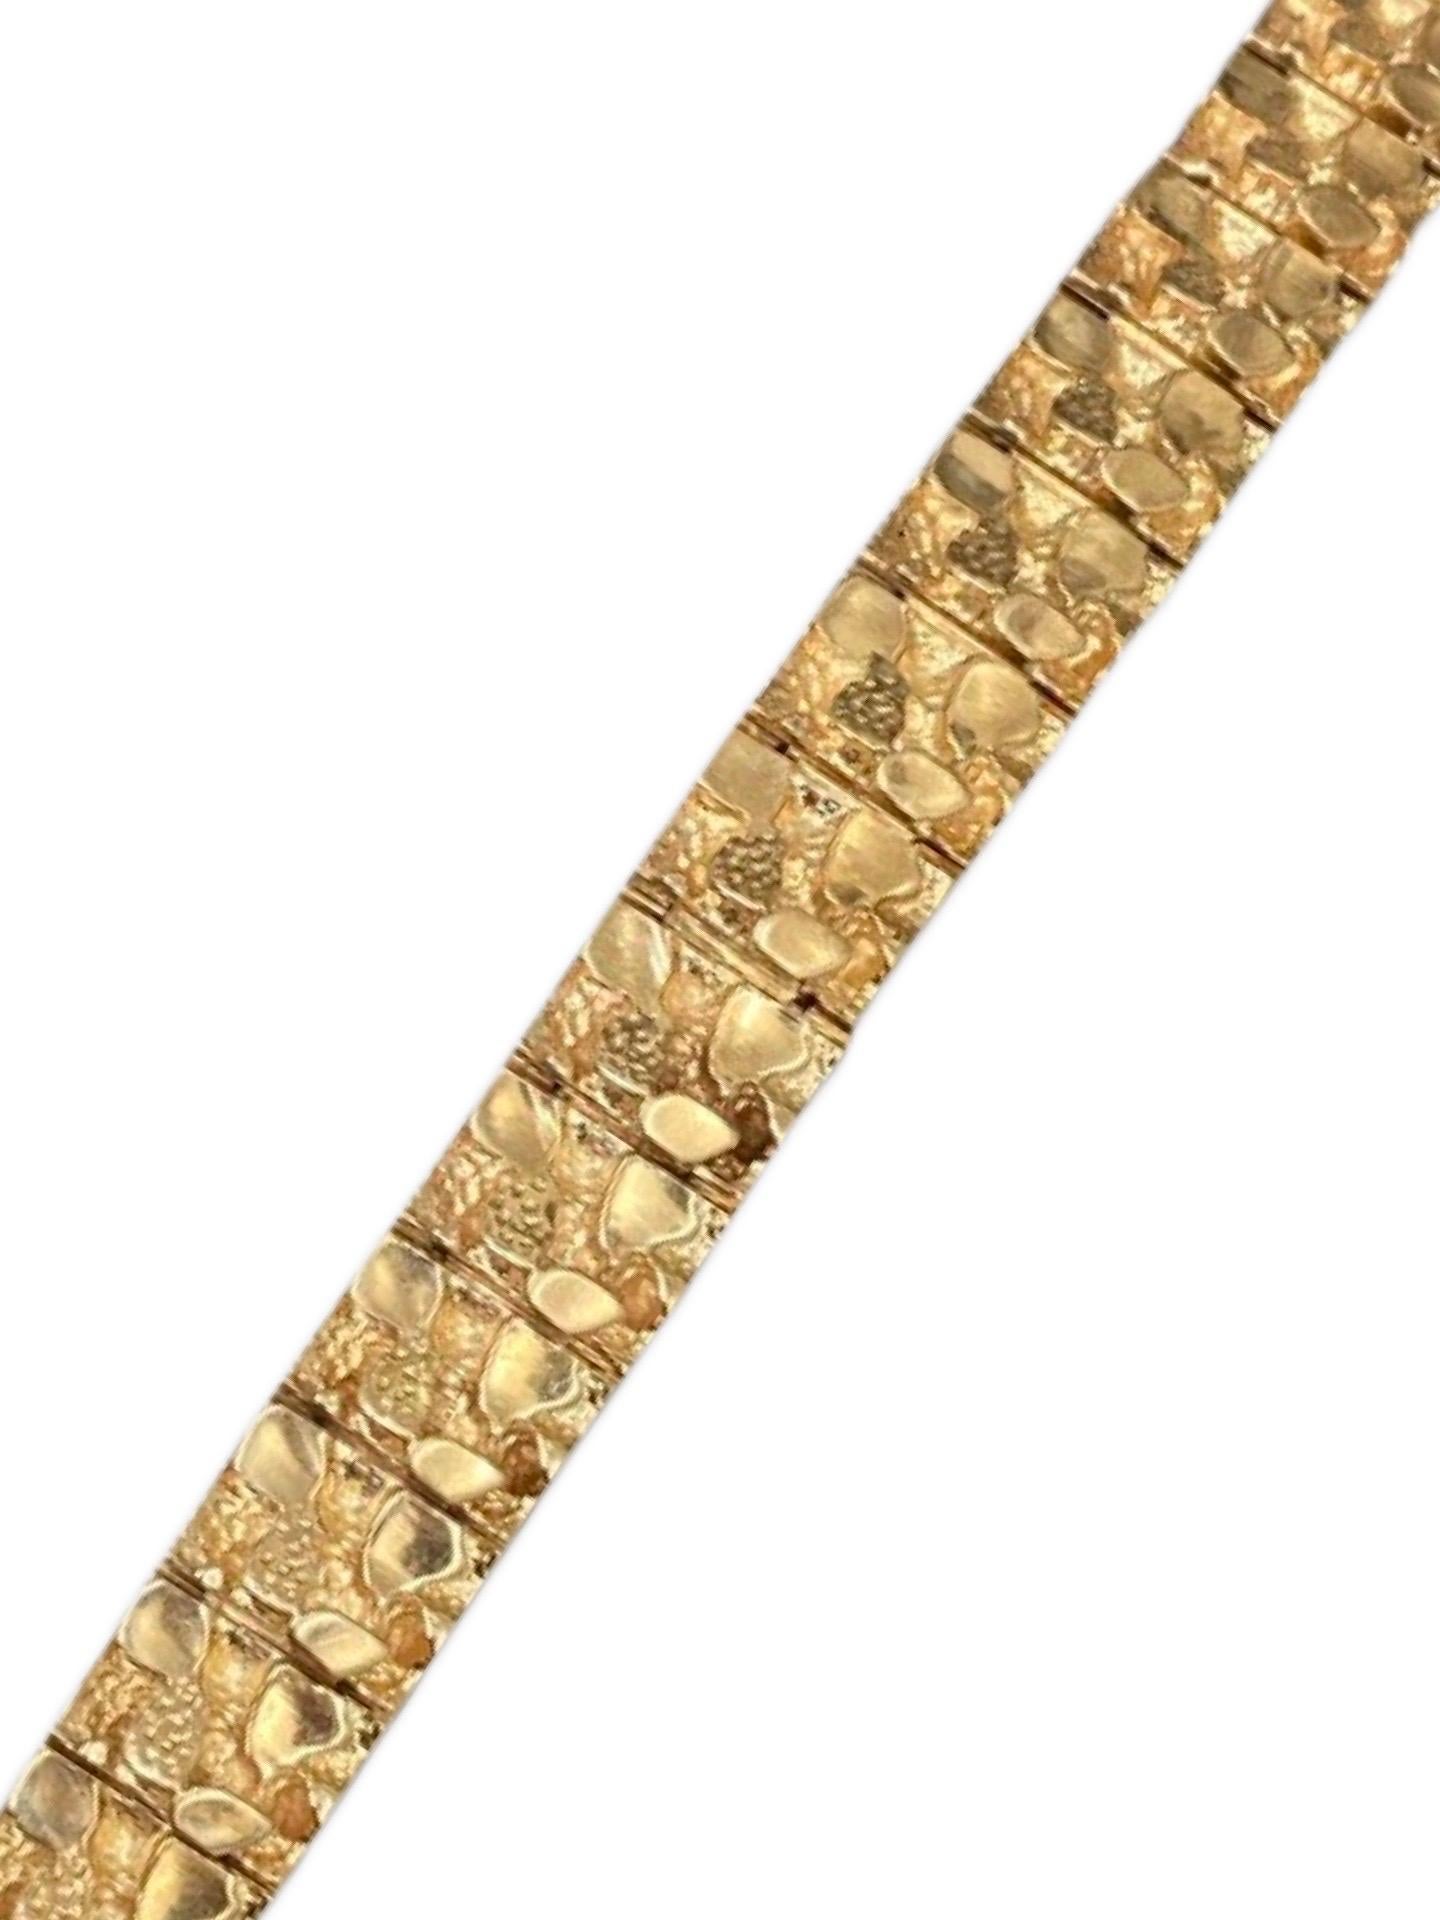 Vintage 12mm Nugget Design Bracelet 14k 8 Inch. Very heavy bracelet weighing 61.5g solid gold. Singed and plumped 14k gold.